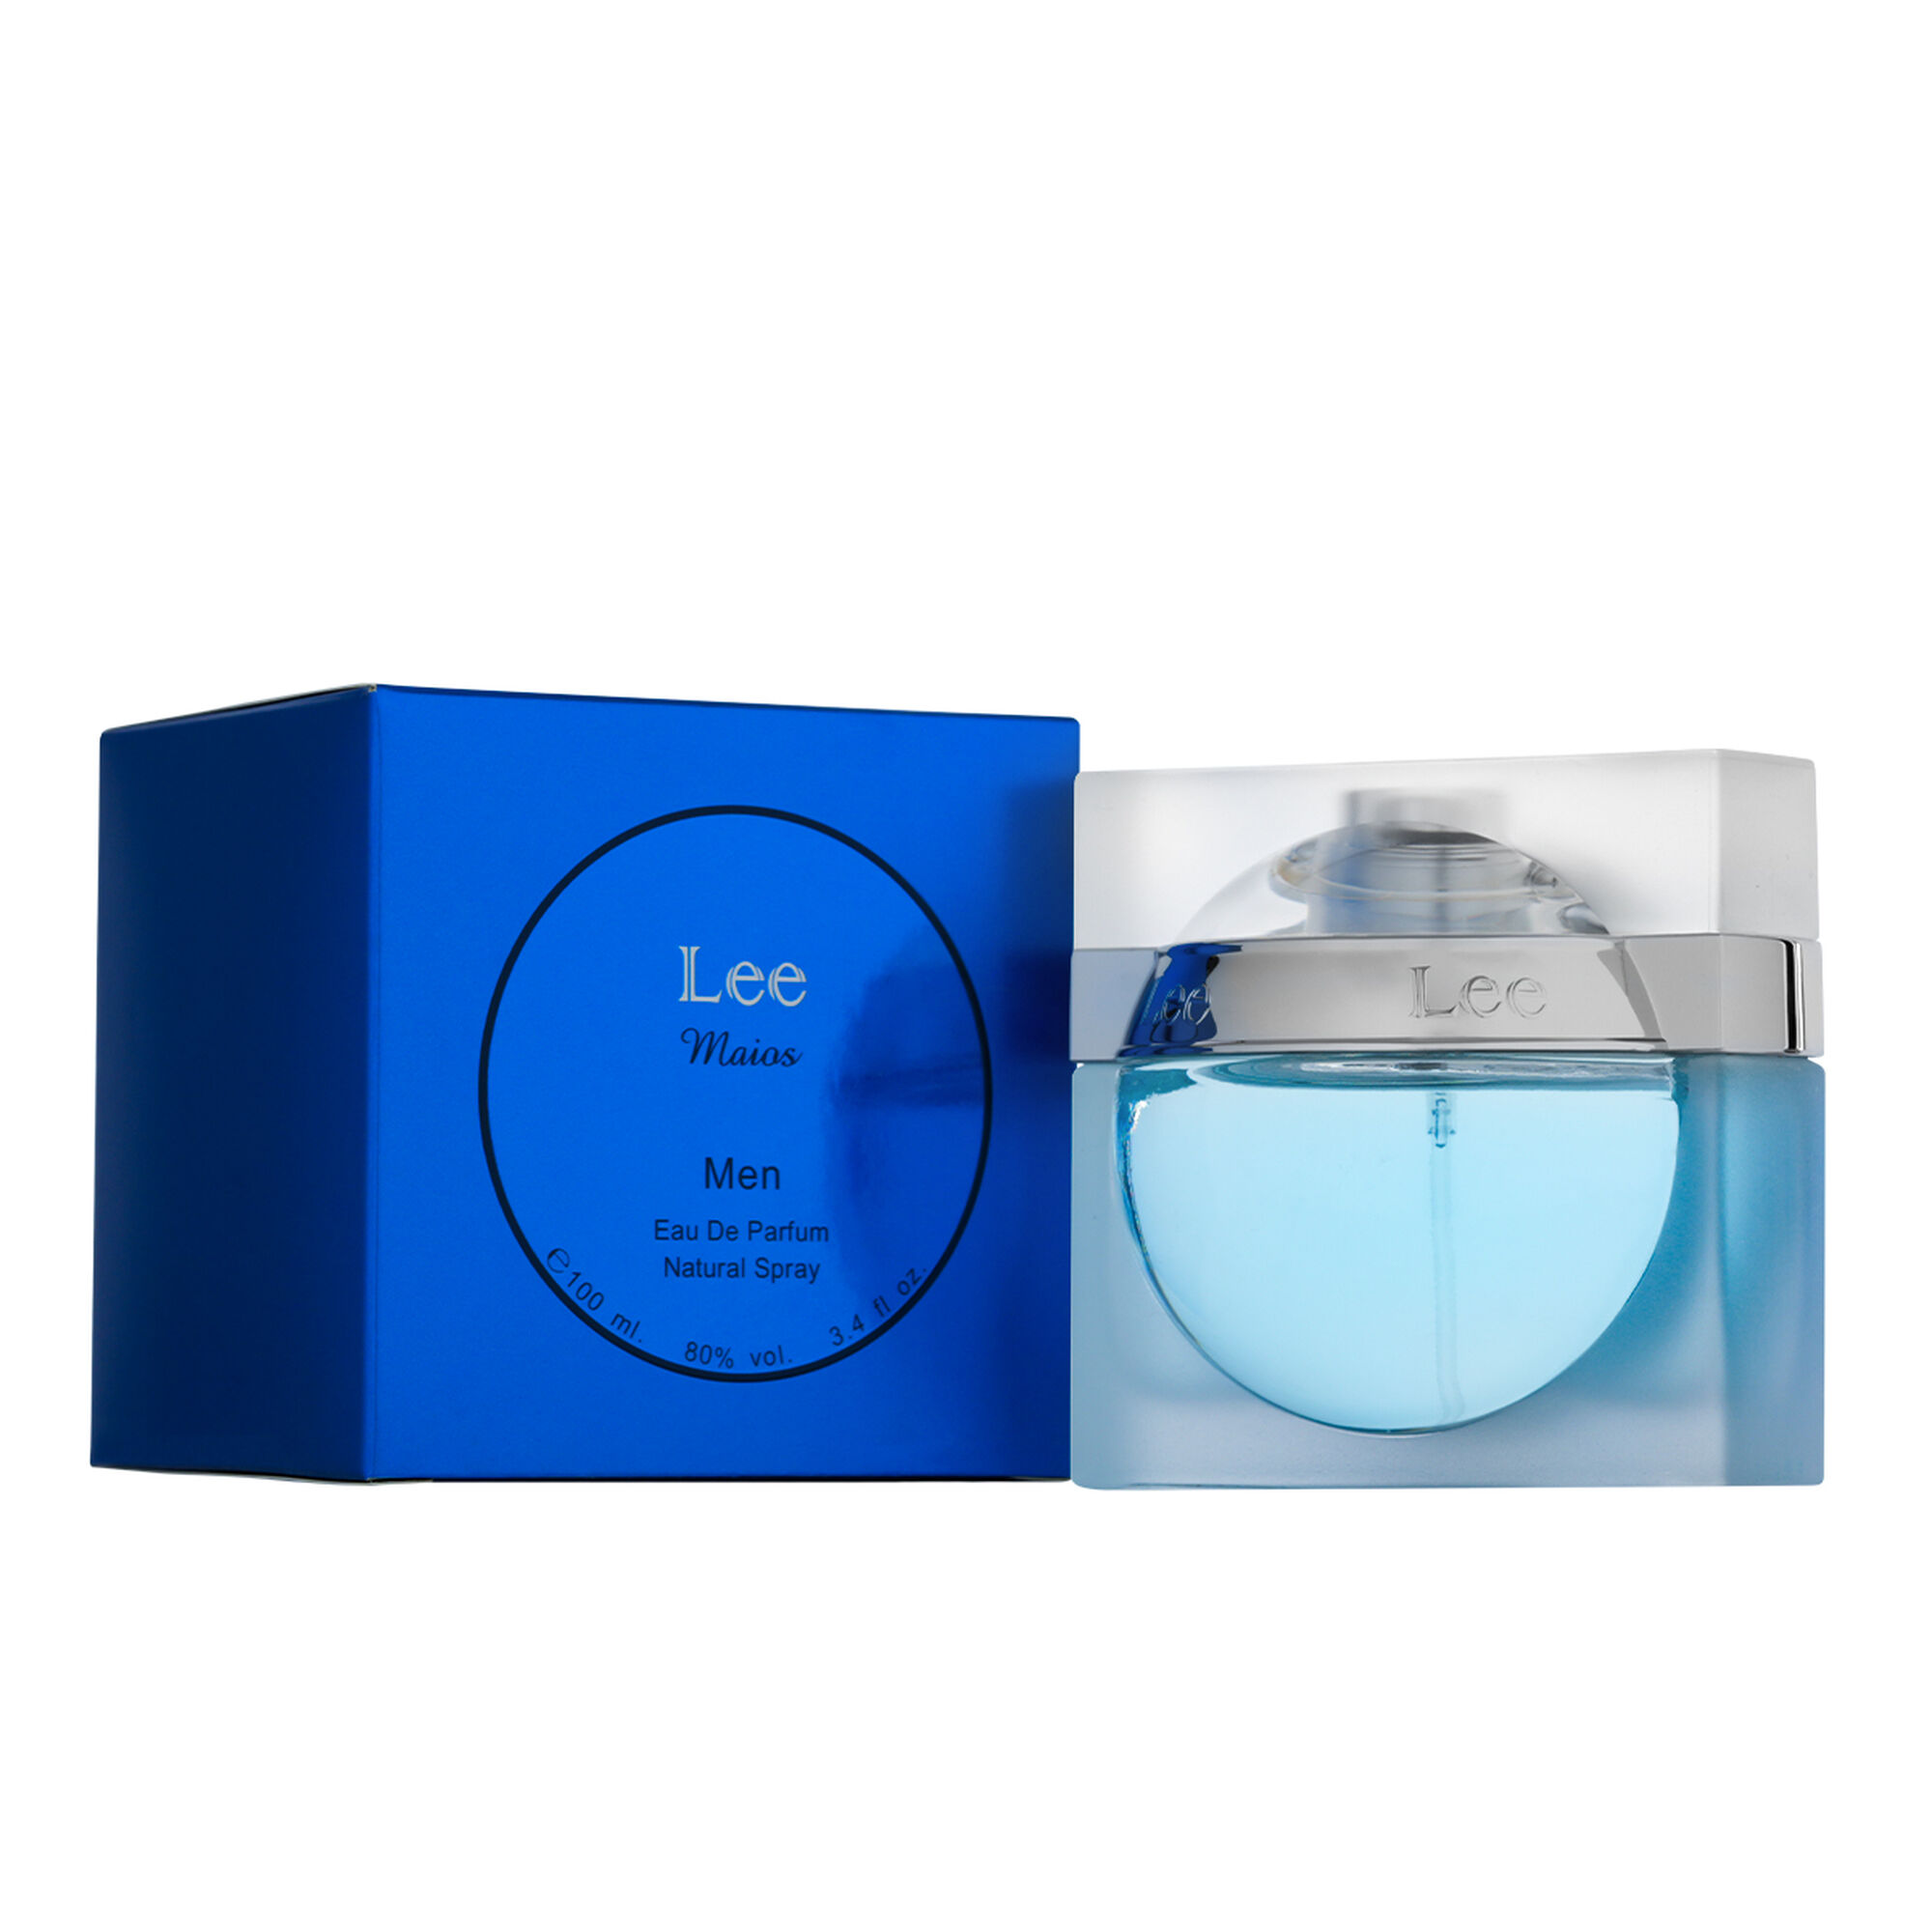 Lee Perfume by Maios 100ml